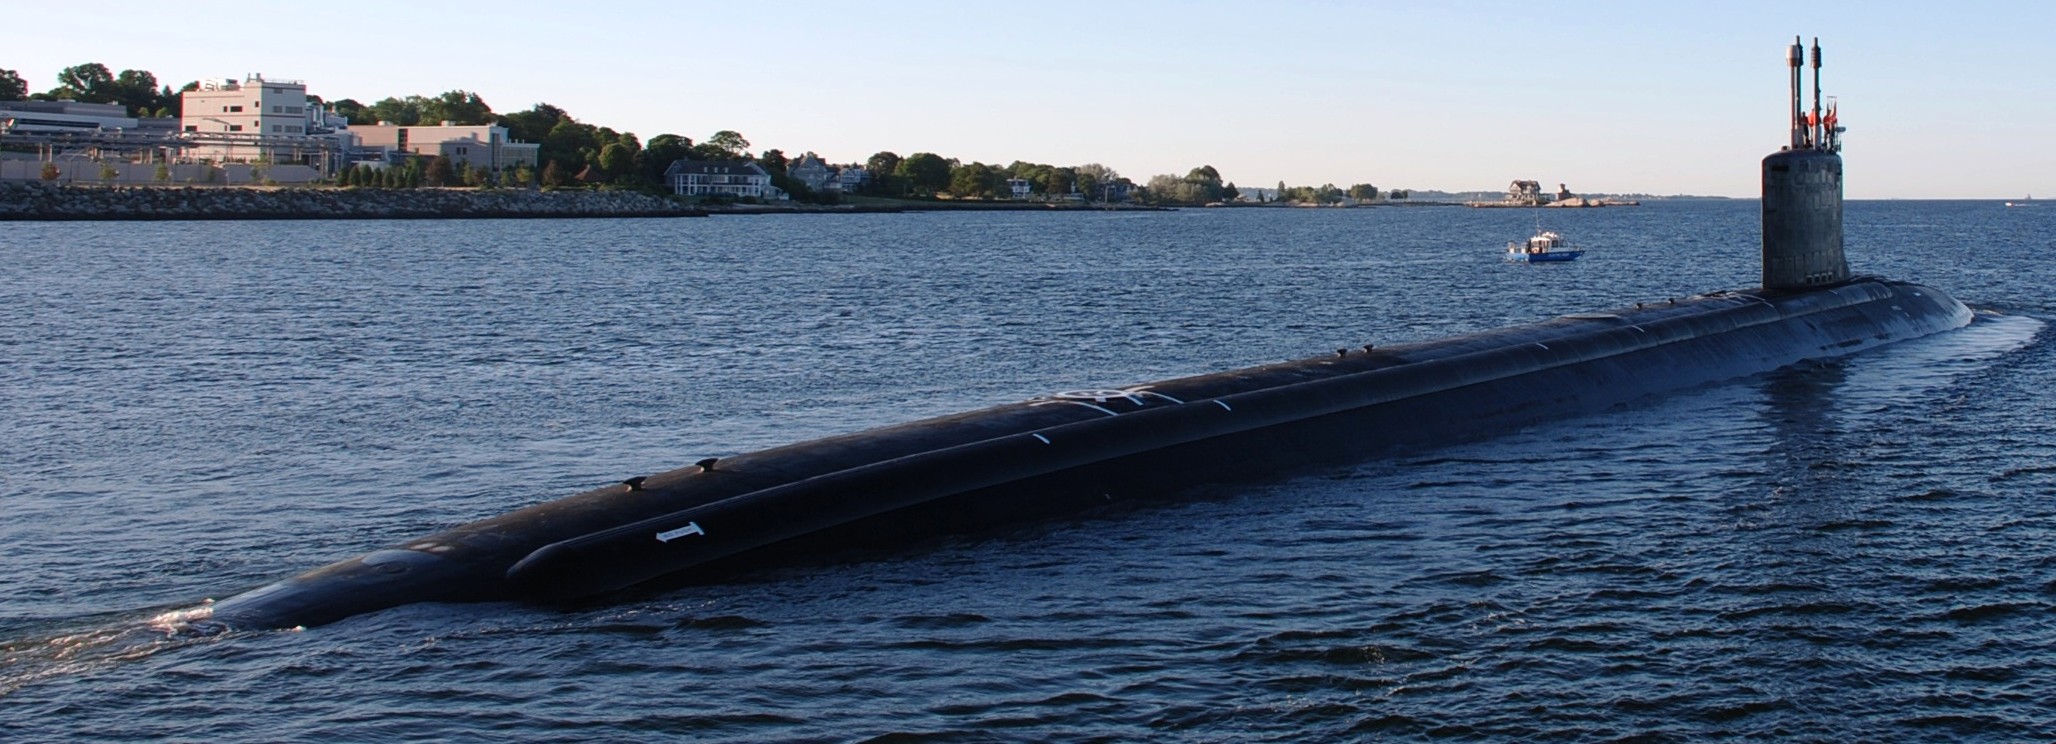 ssn-780 uss missouri virginia class attack submarine us navy 31